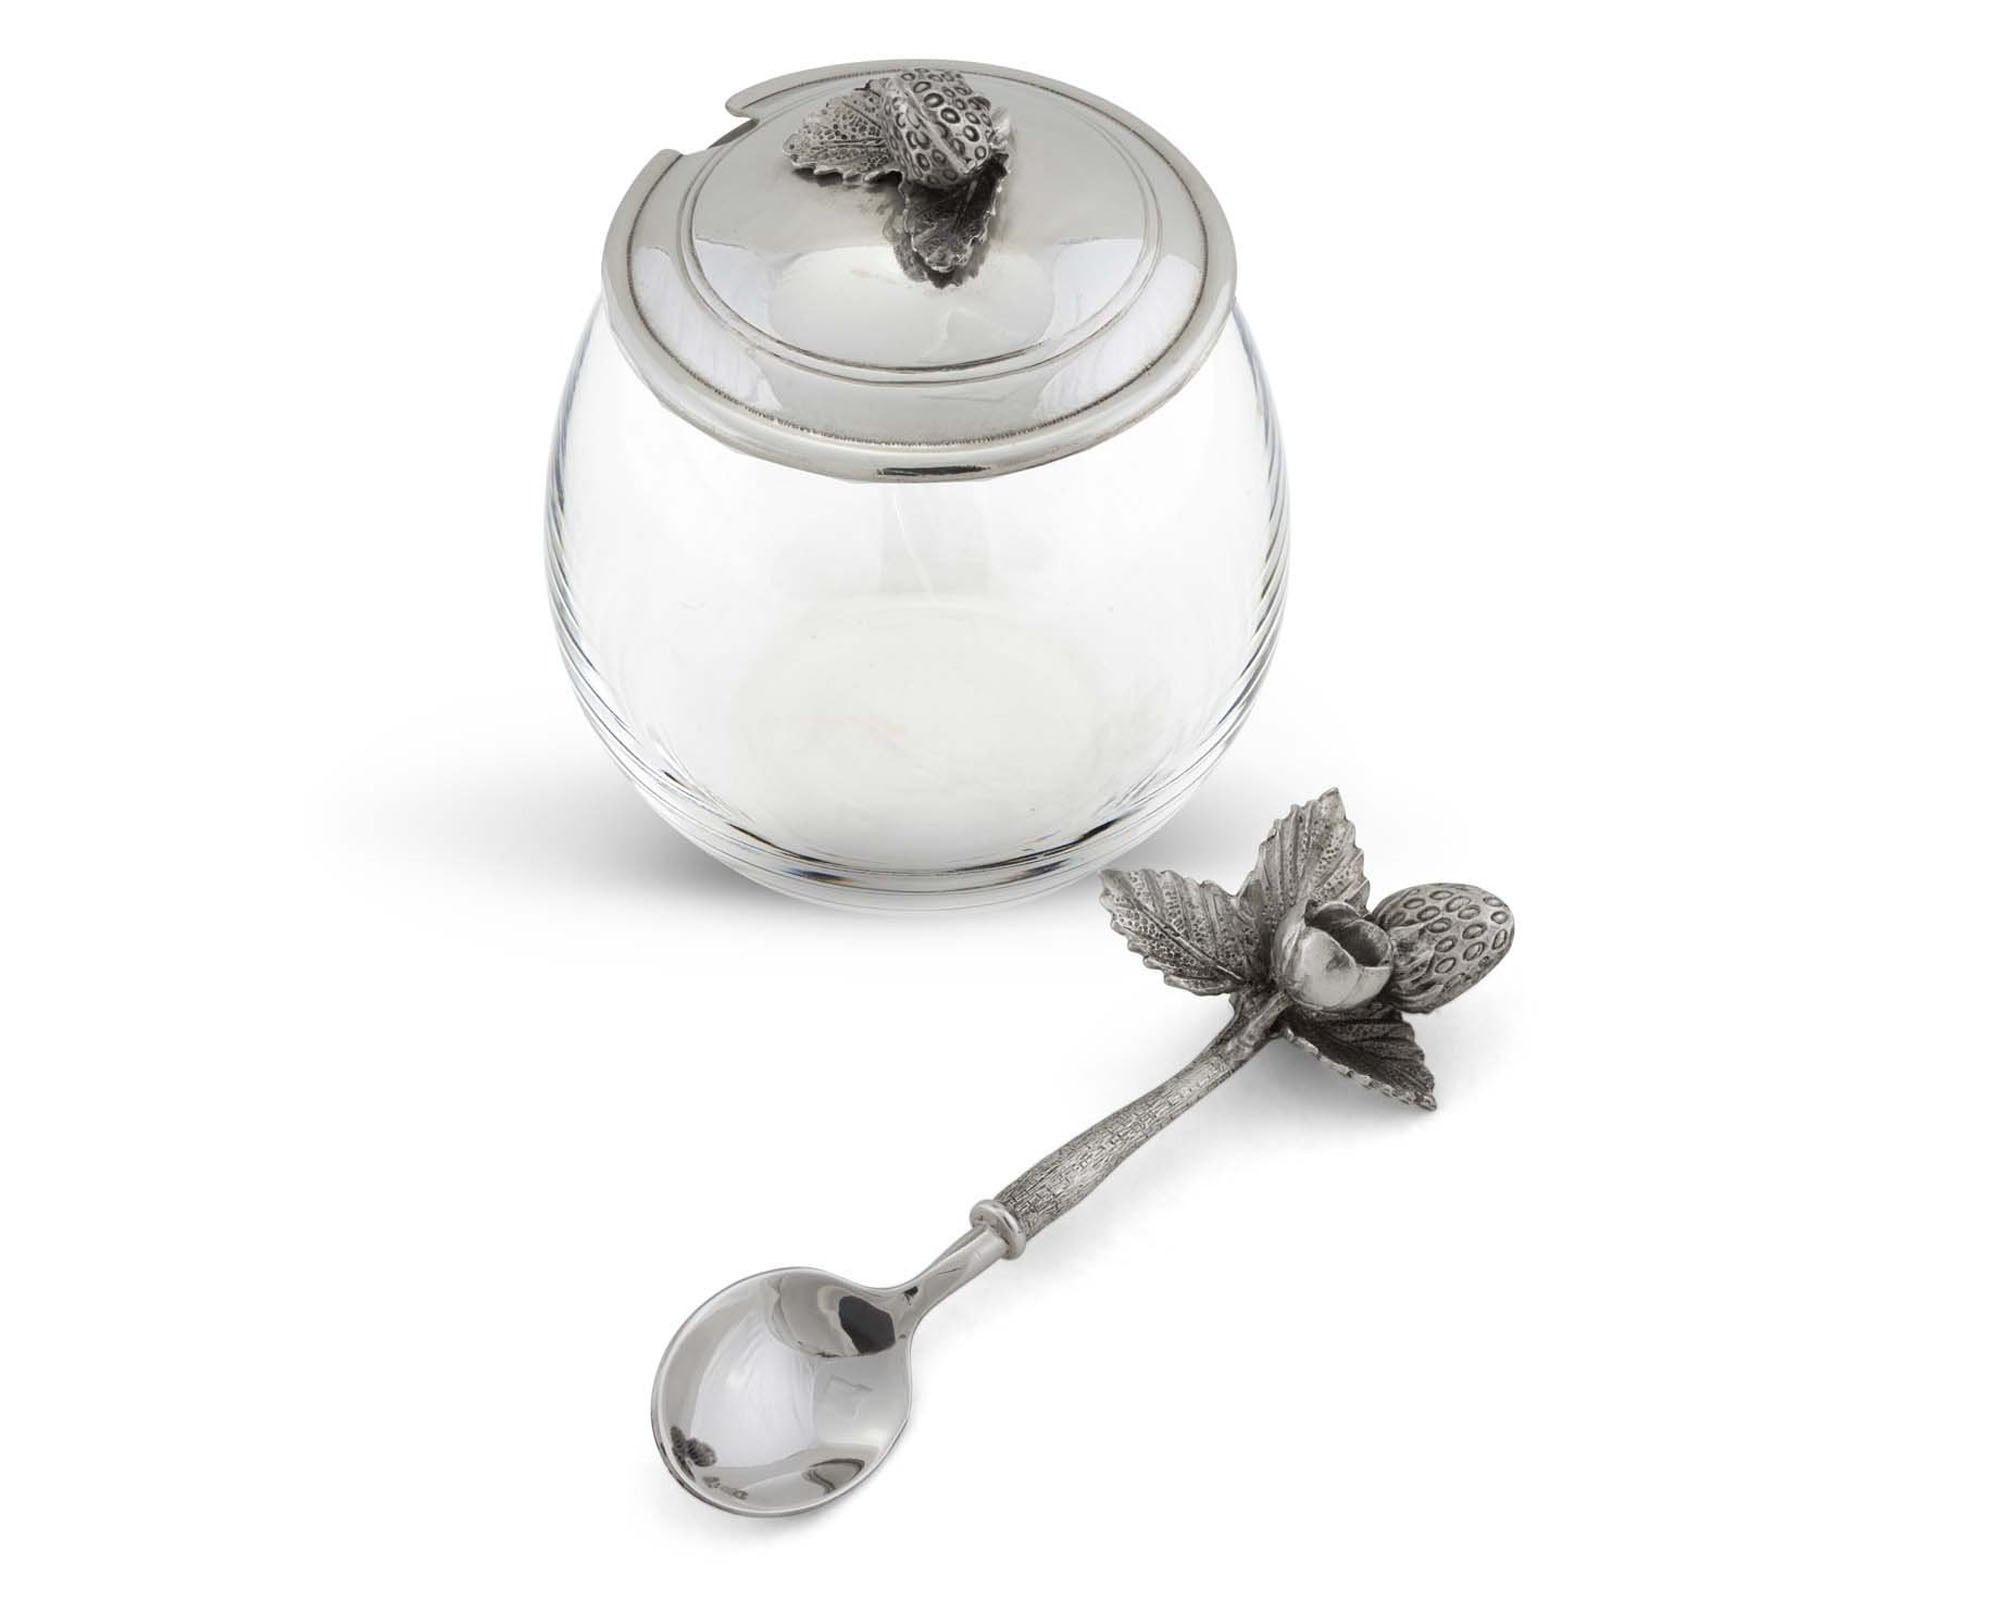 Vagabond House Strawberry Jam Jar with Spoon Product Image